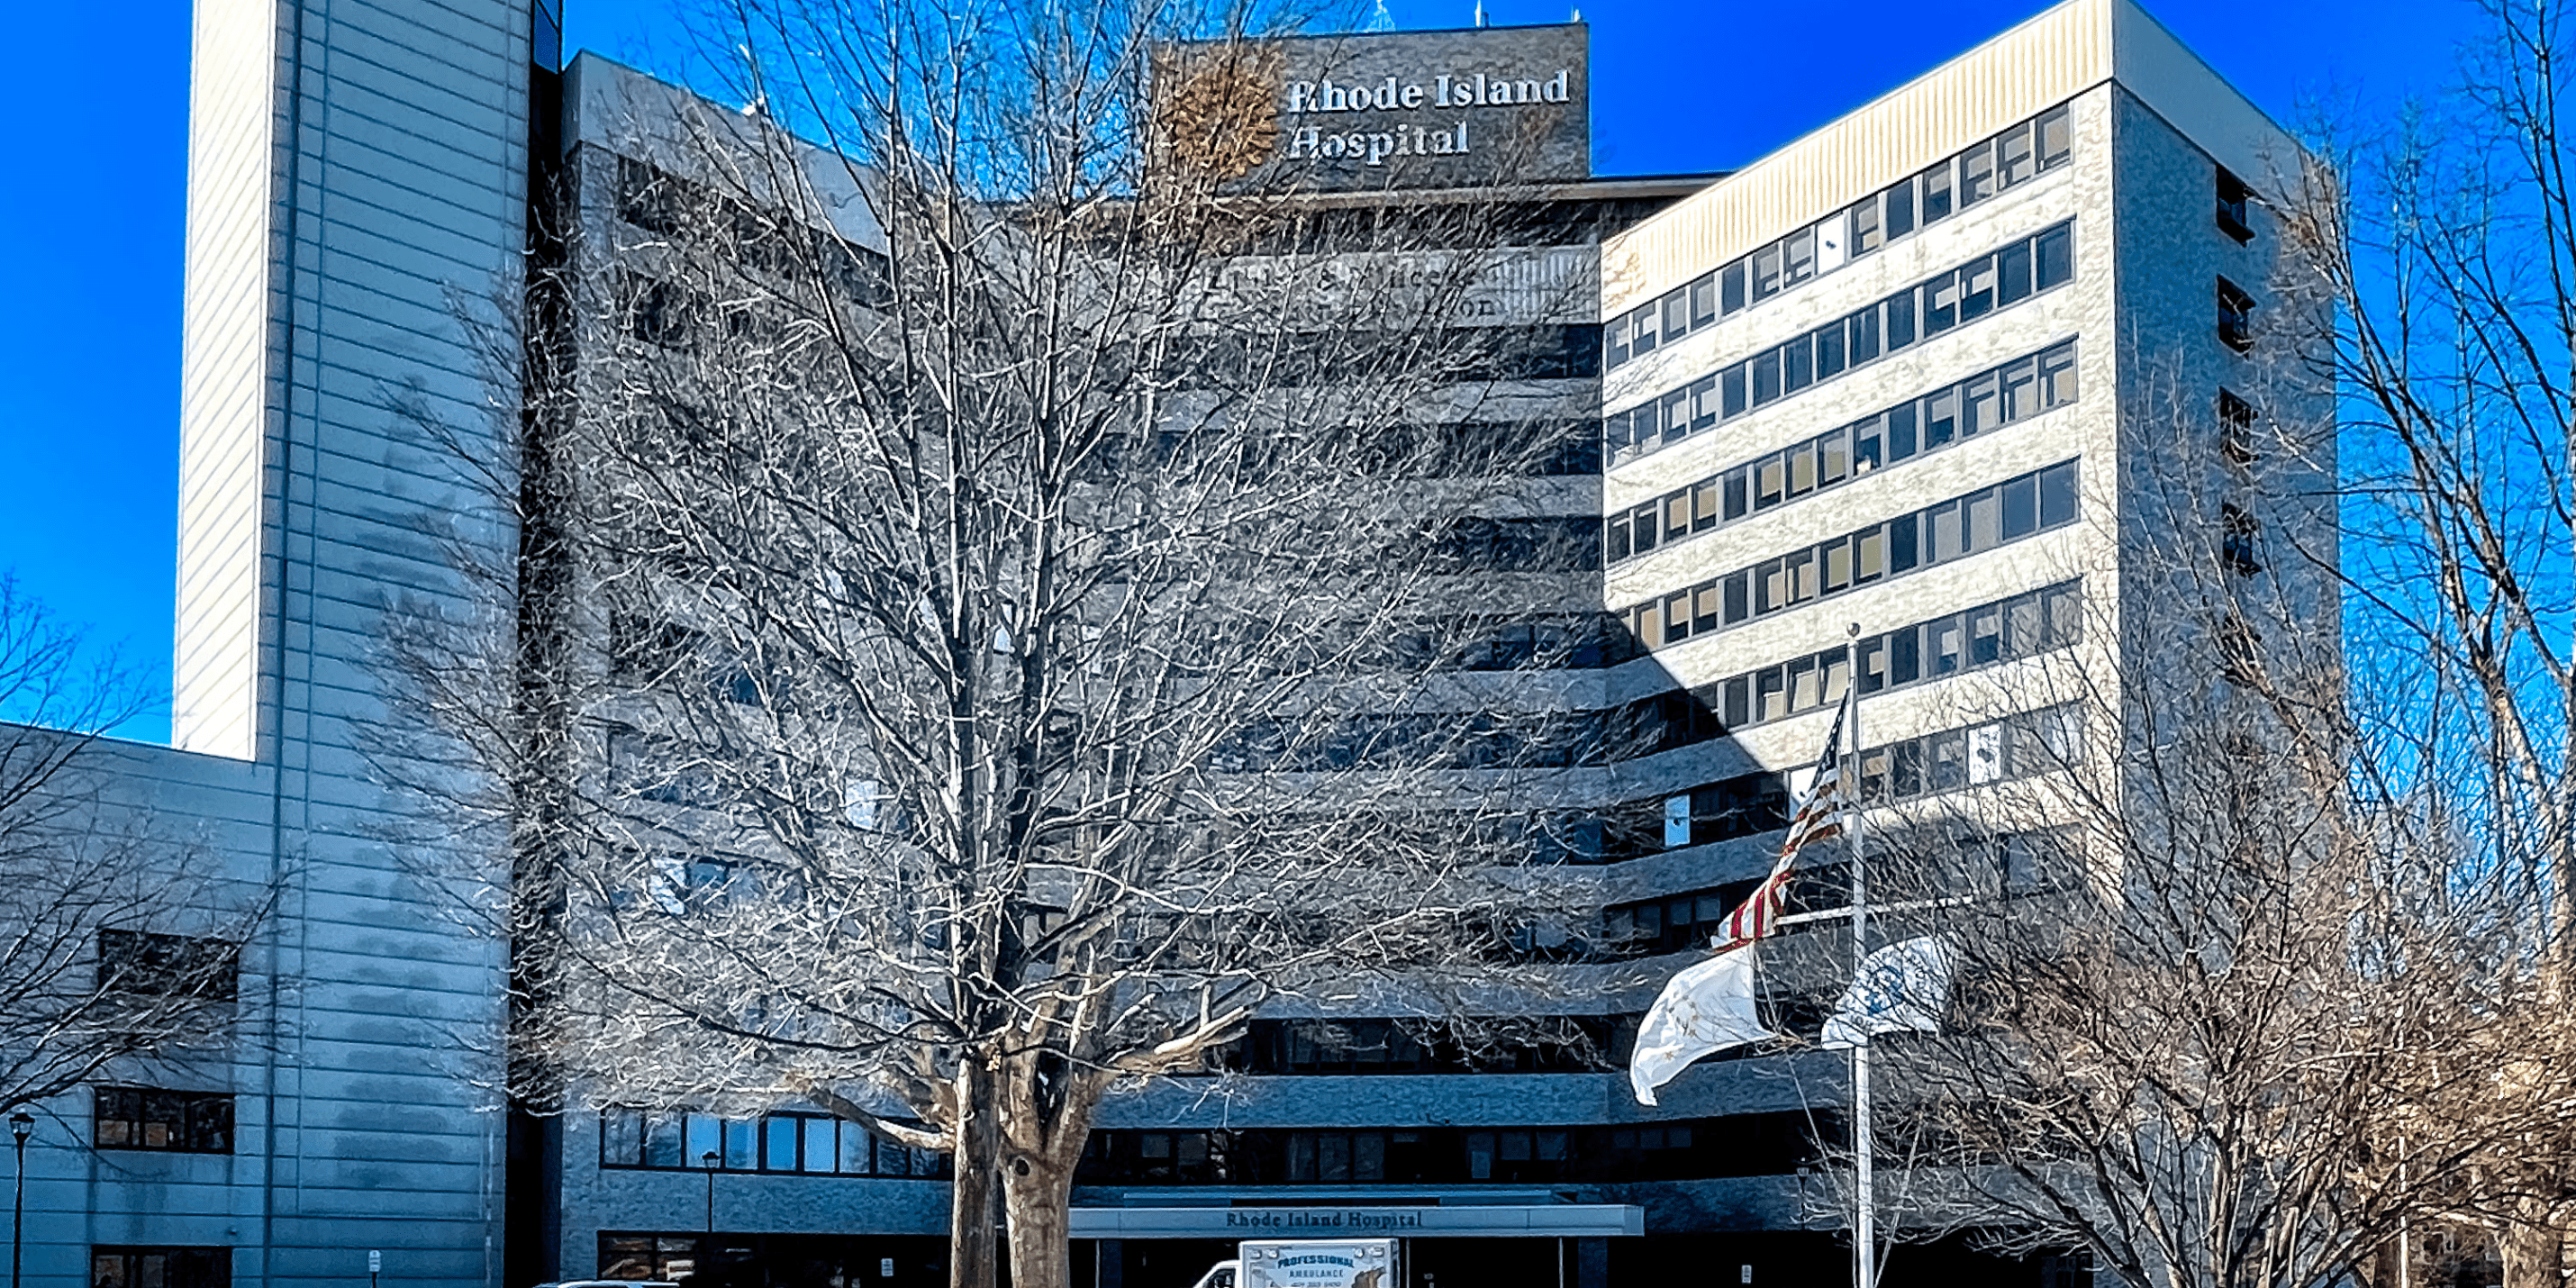 Rhode Island Hospital